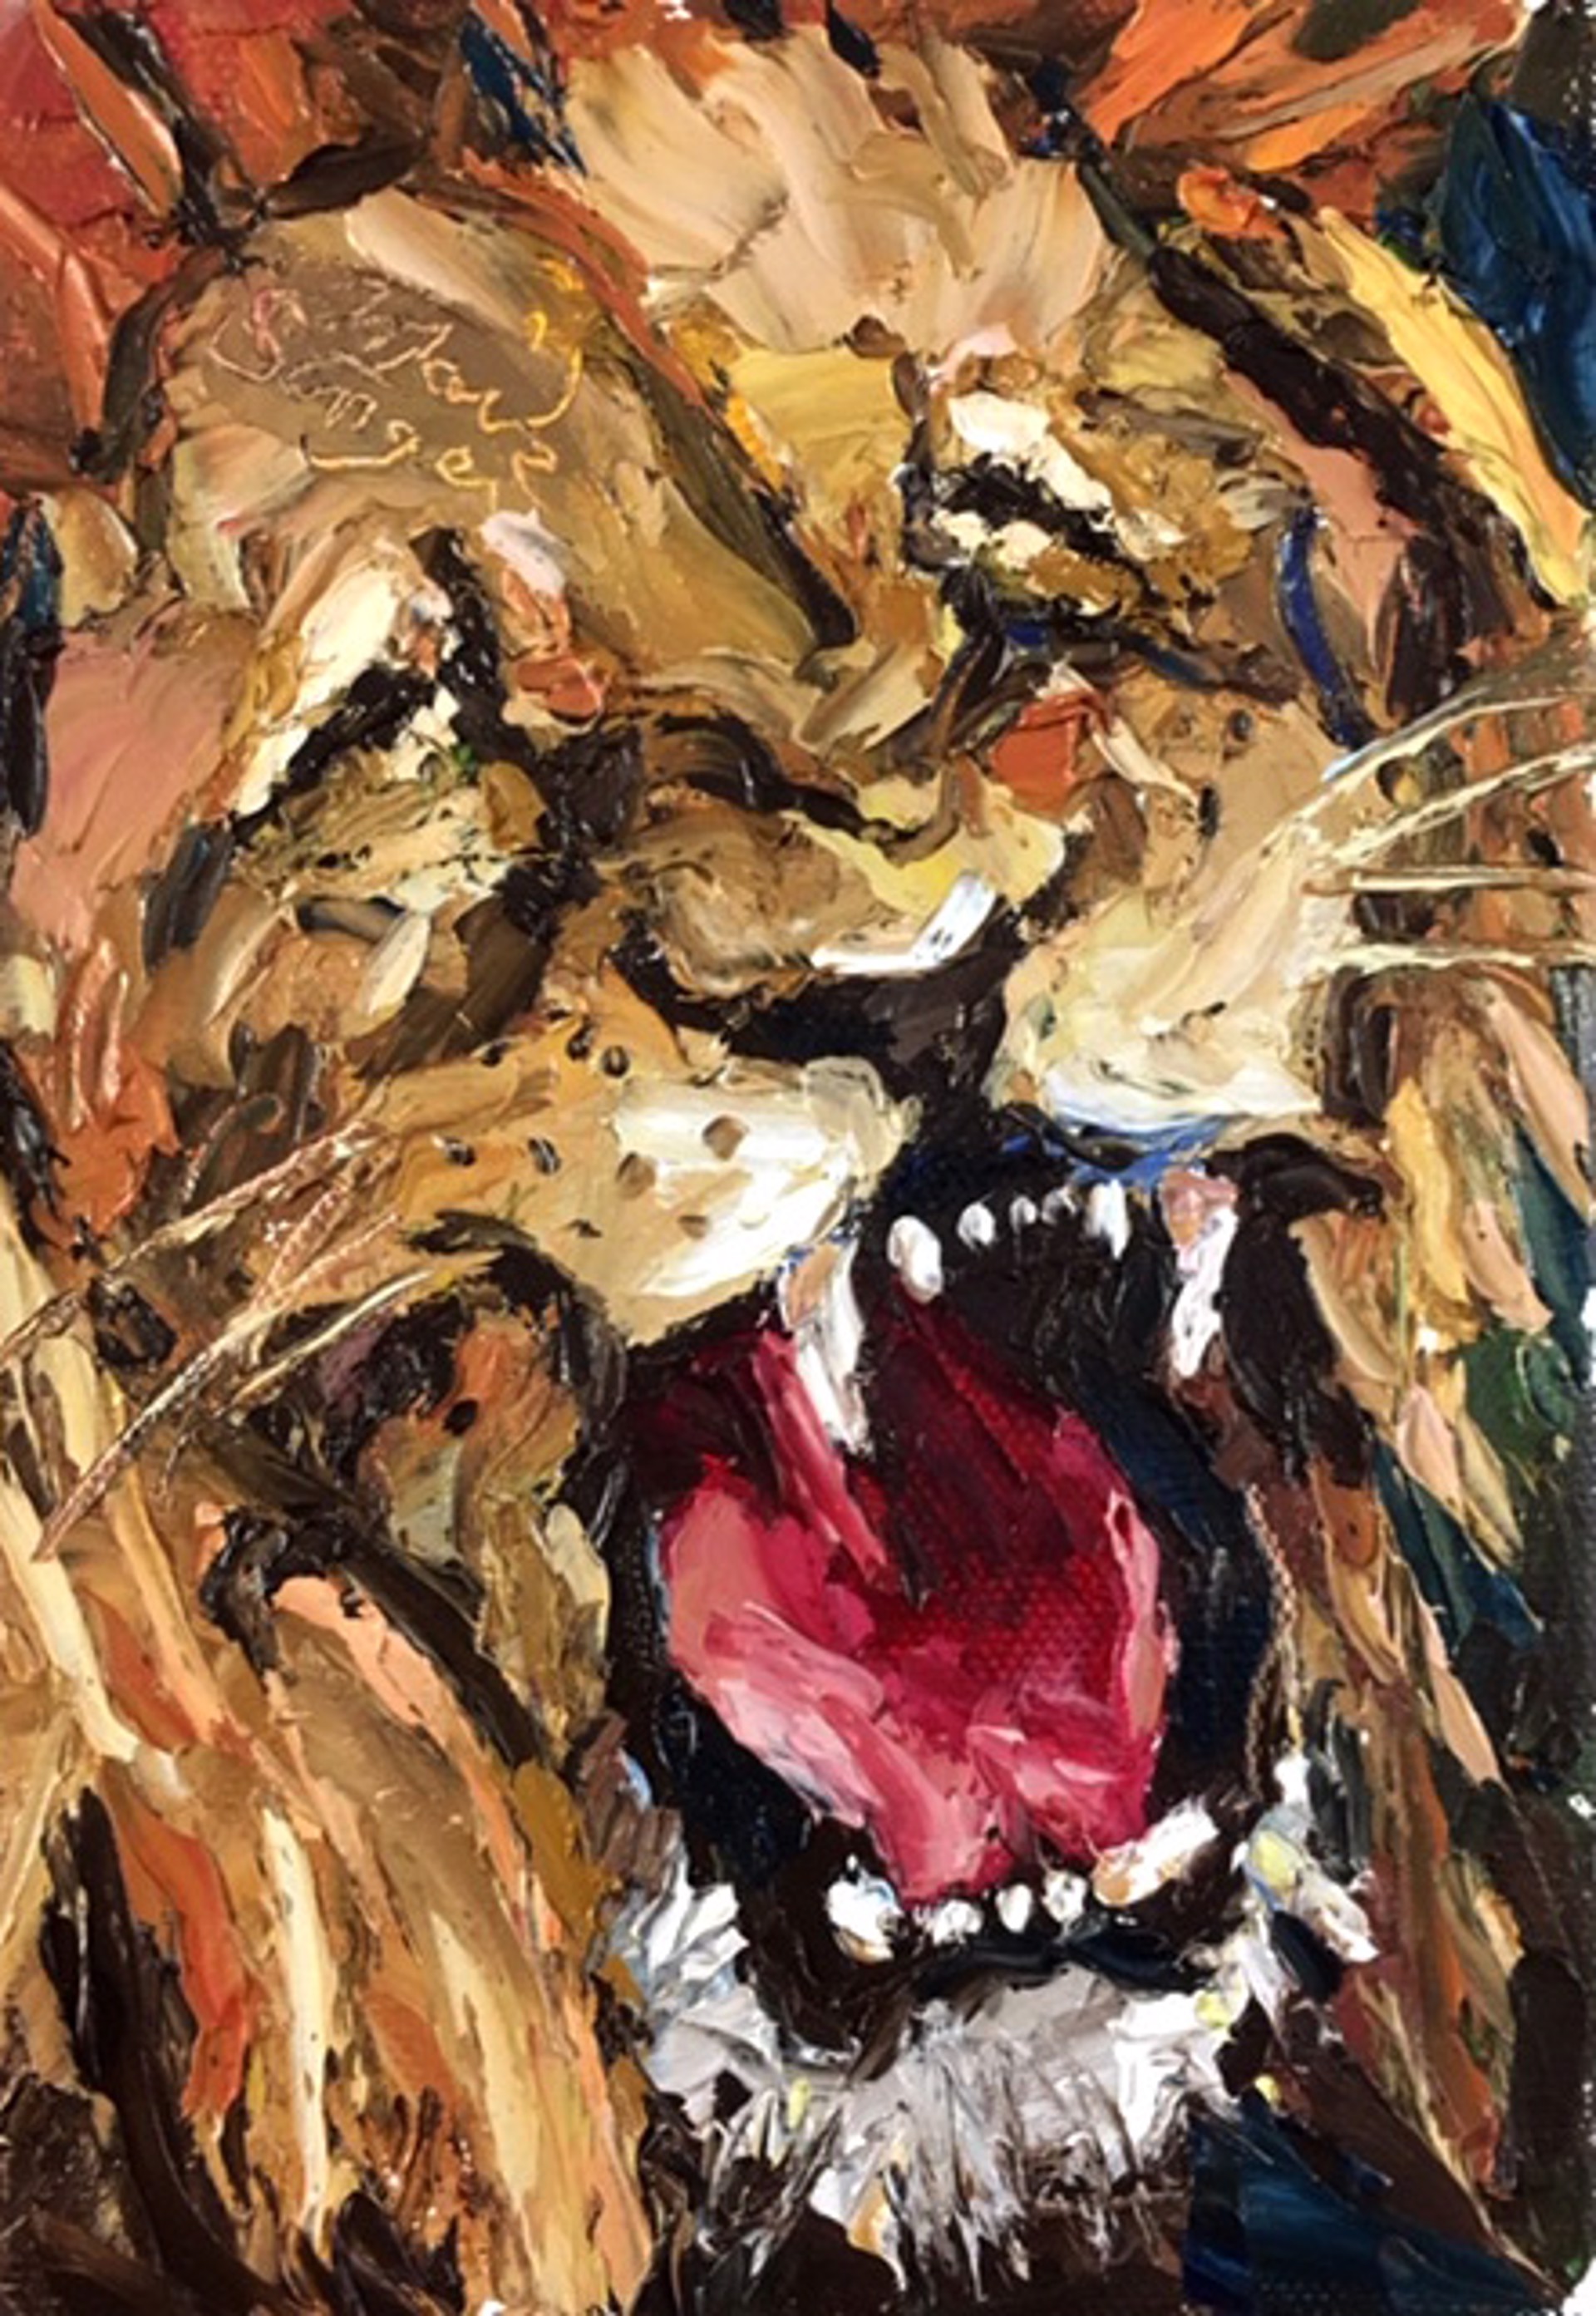 Leo's Agony by Mark Singer